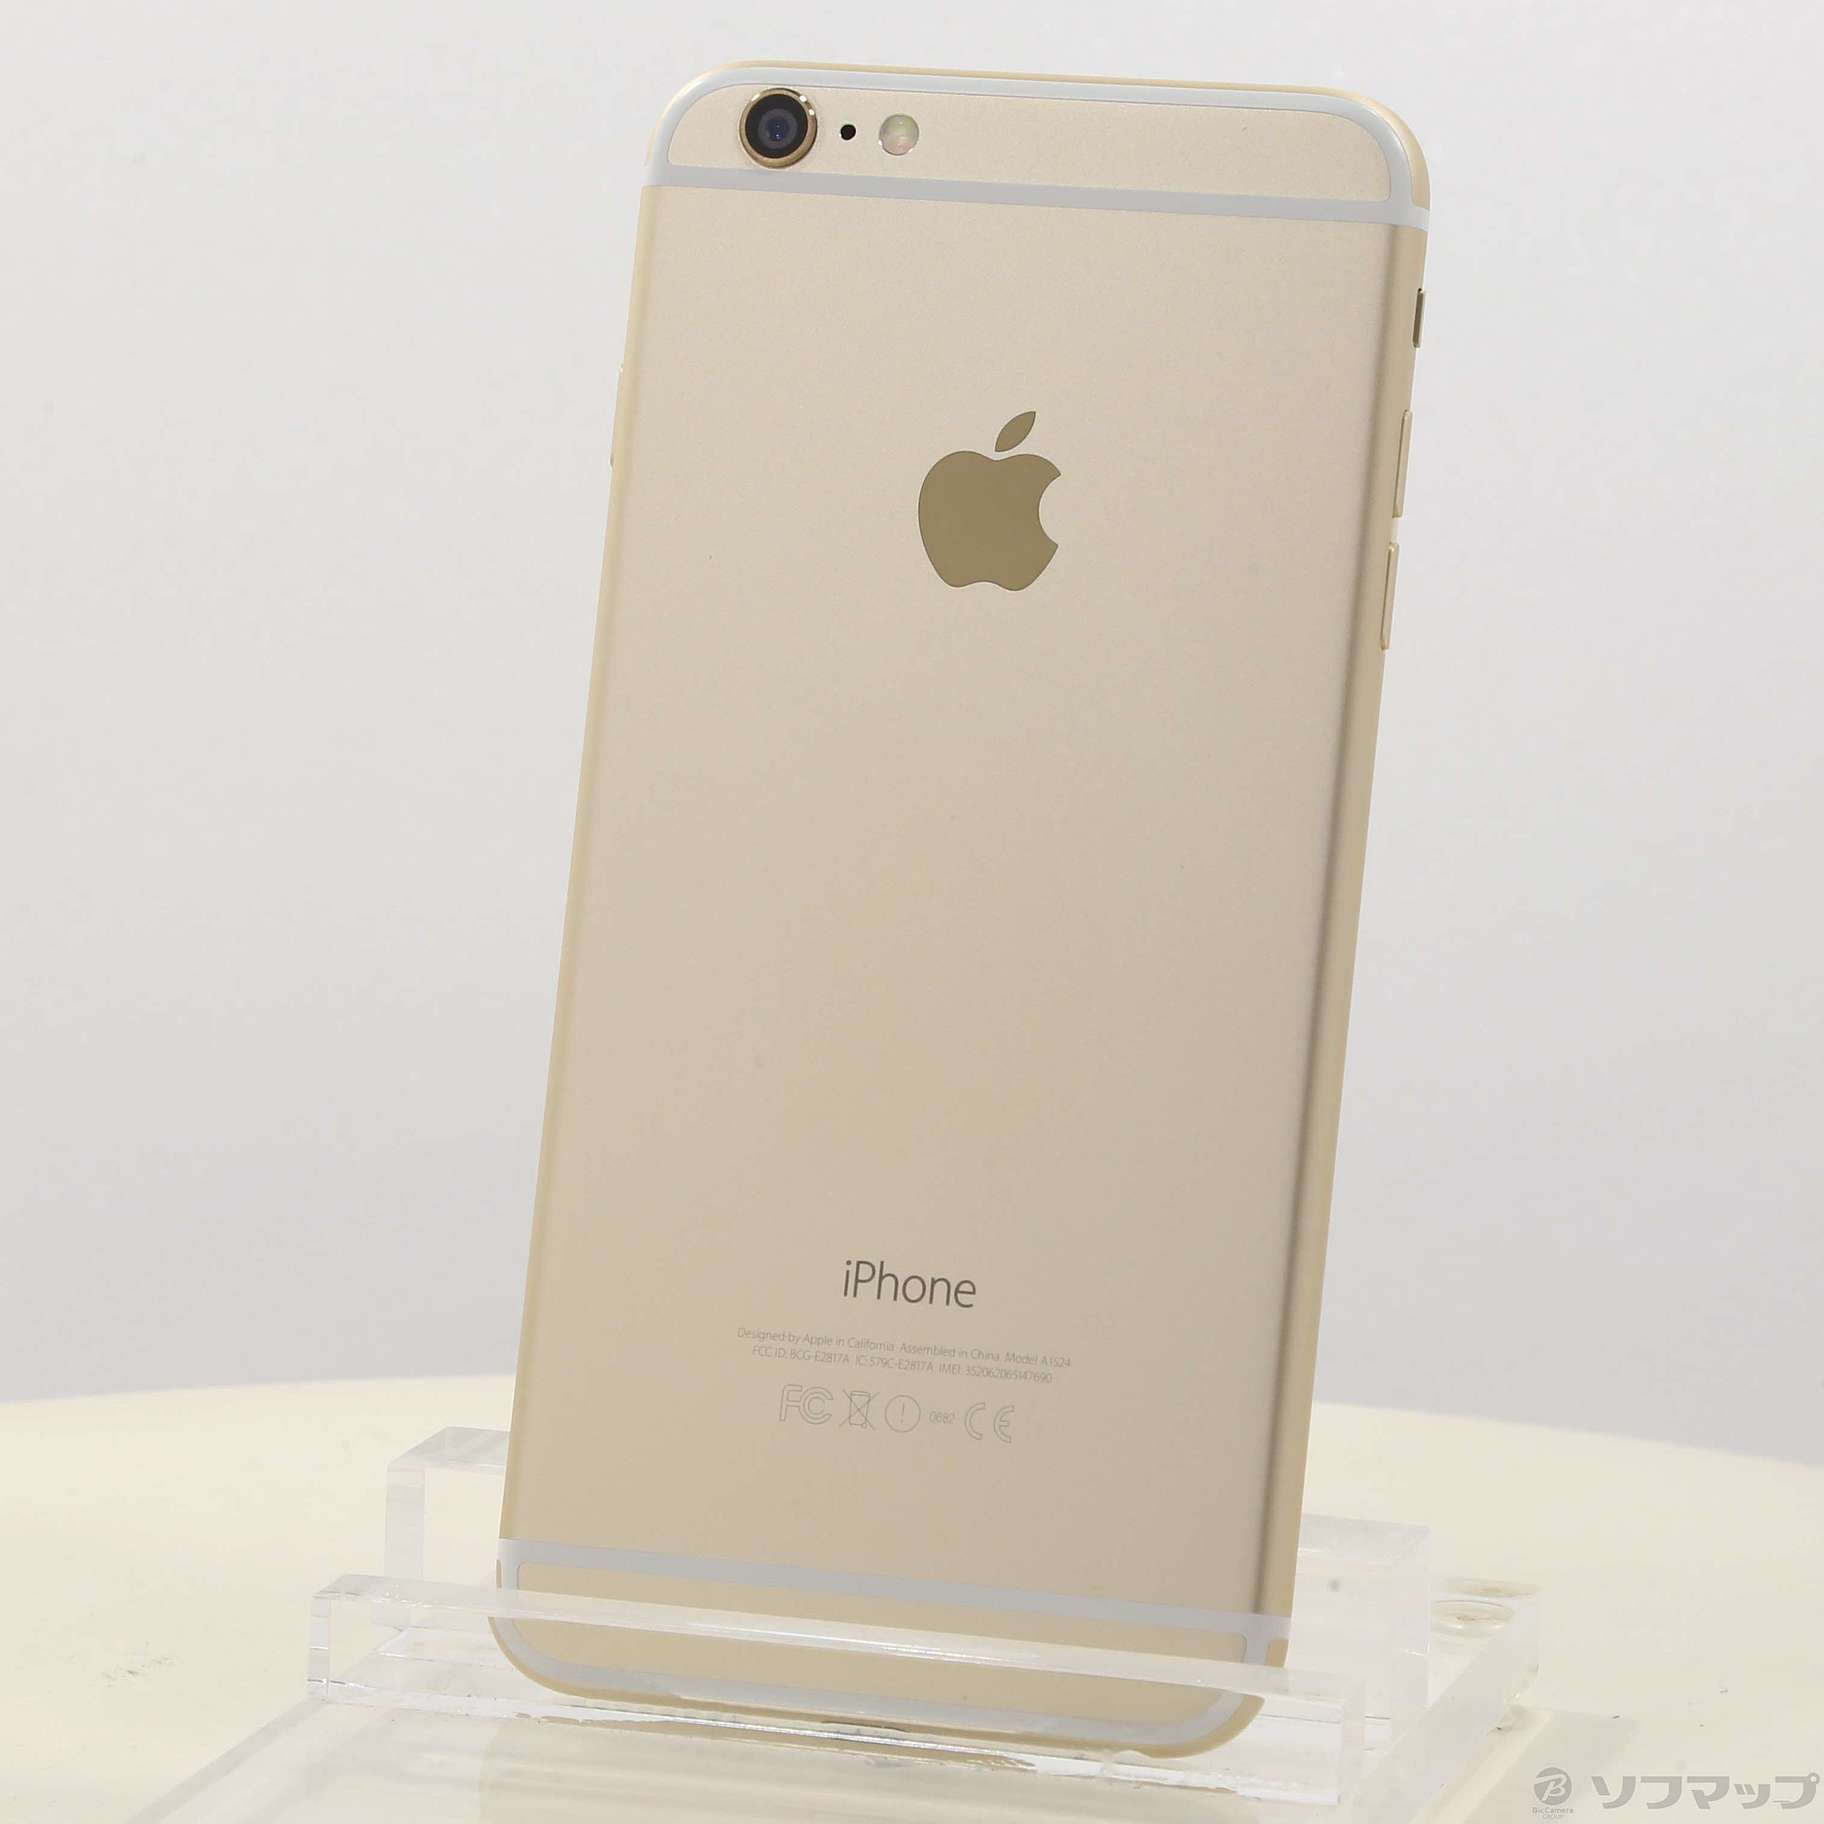 iPhone 6 Gold 128 GB docomo - 携帯電話